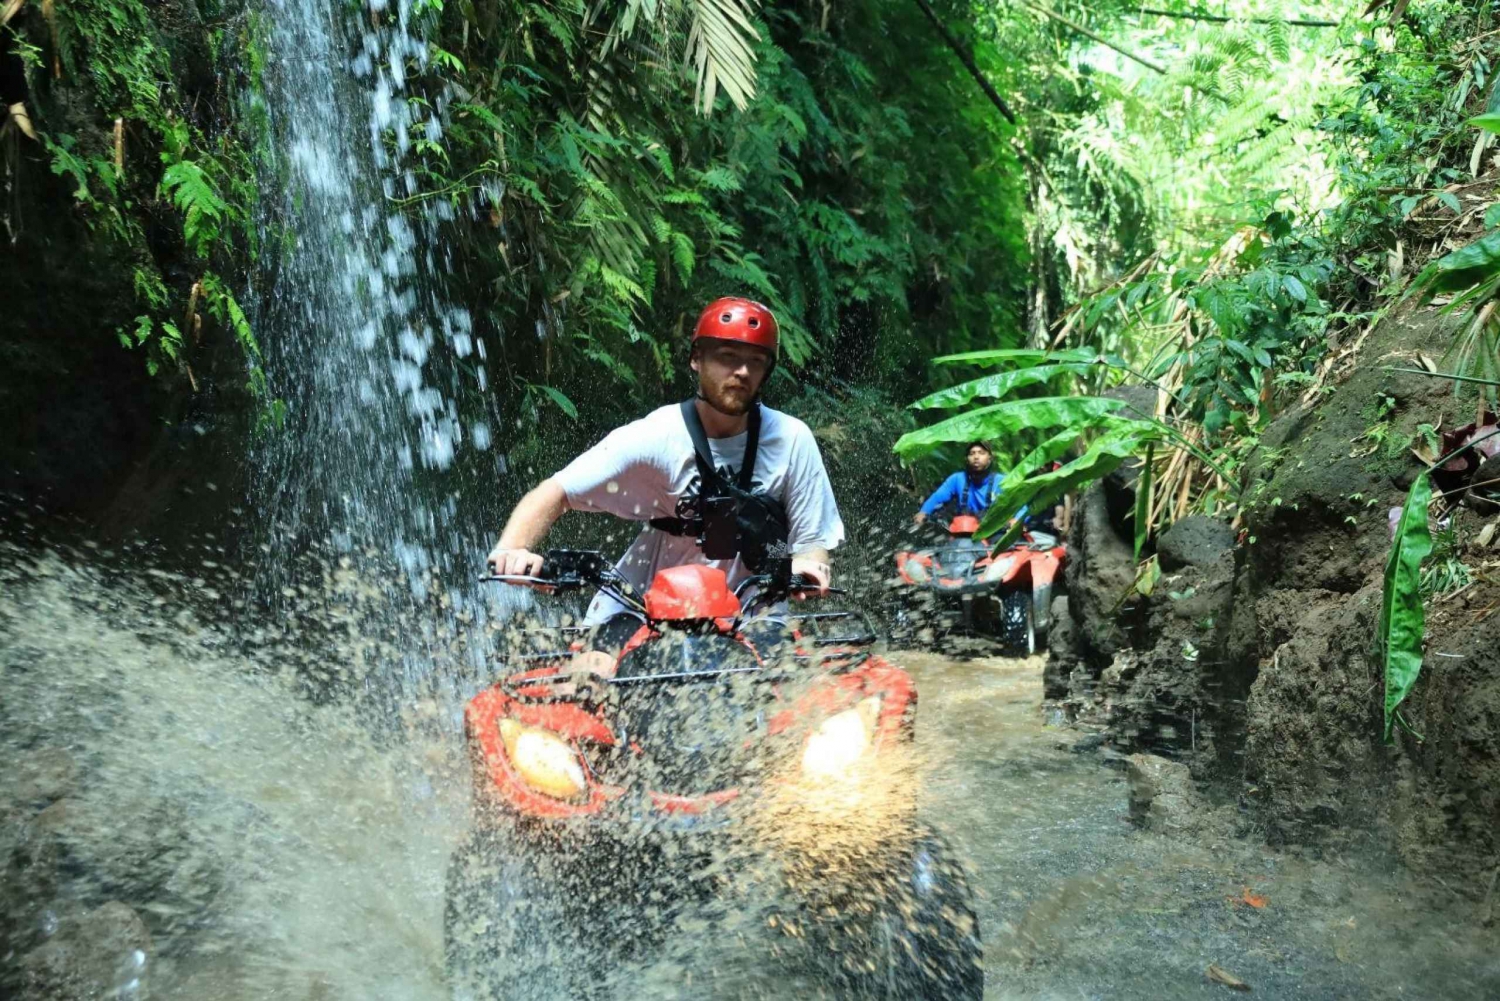 Ubud ATV Ride through River,Jungle, Rice Fields, Puddles